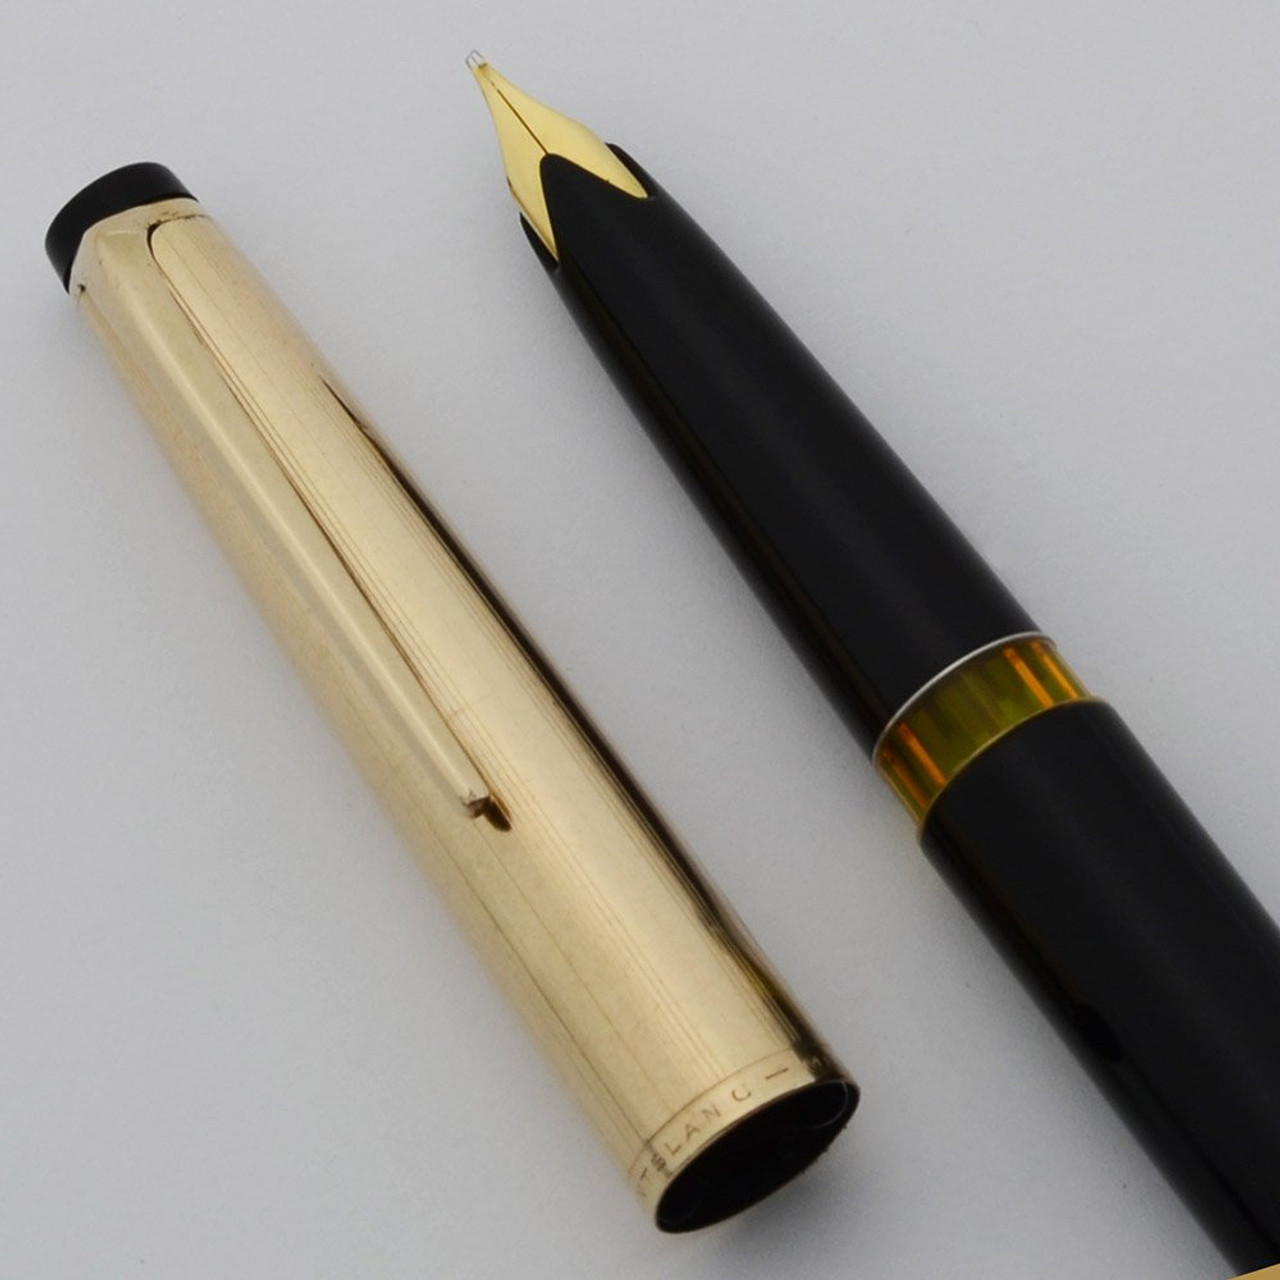 Montblanc 72 Fountain Pen (1950s) - Black, GF Cap, Piston Fill, 18k Oblique Broad Nib (Very Nice, Works Well)